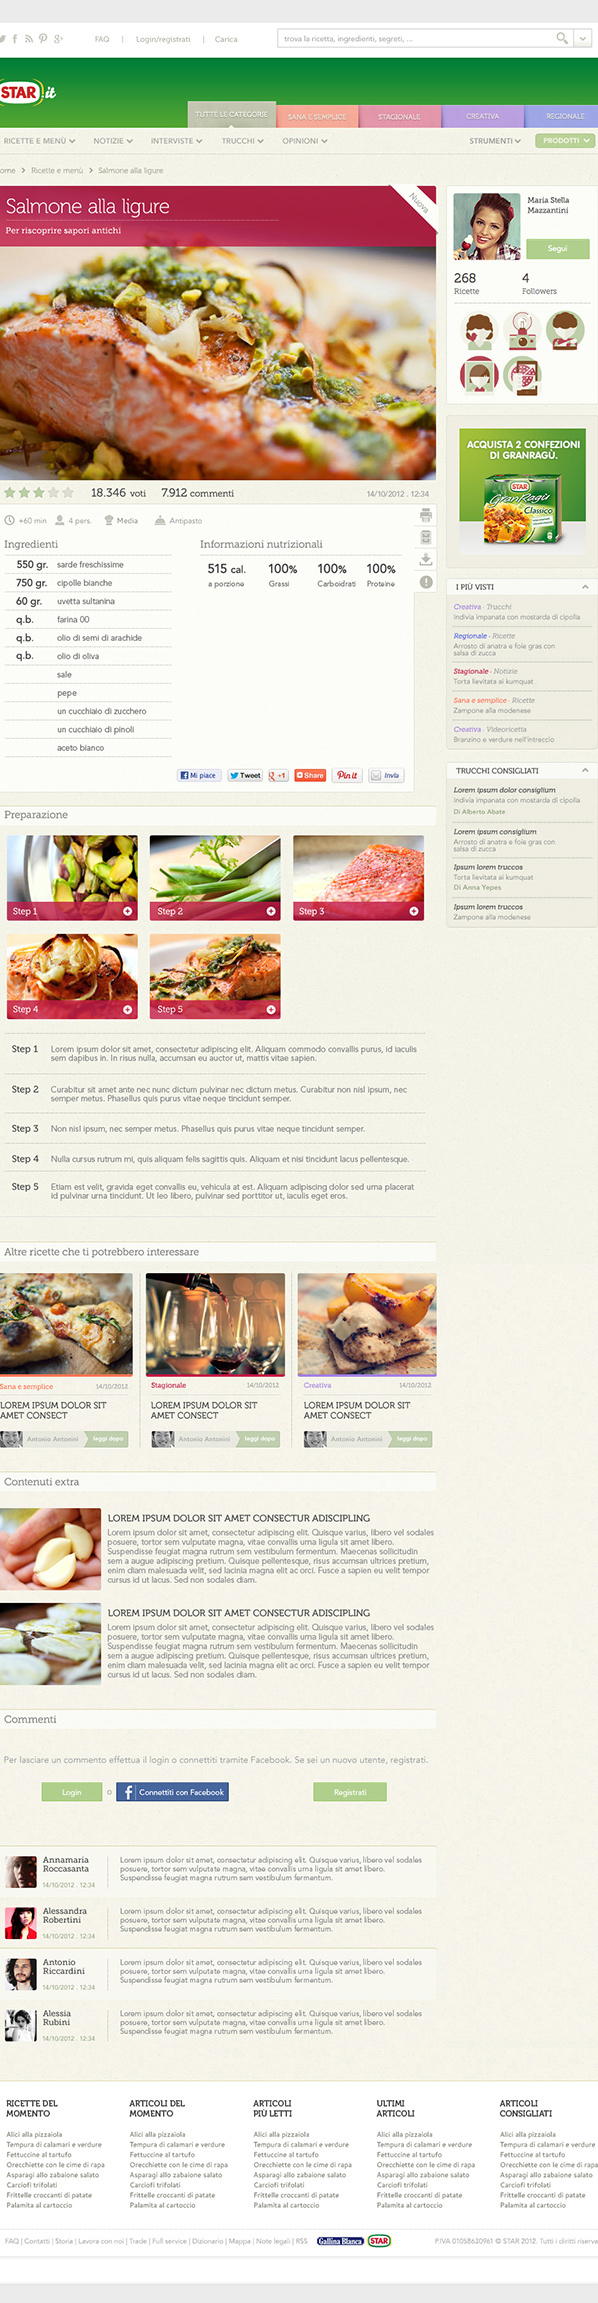 Web digital recipe badge chef comunication newsletter Responsive design star Cucina kitchen Food  logo design